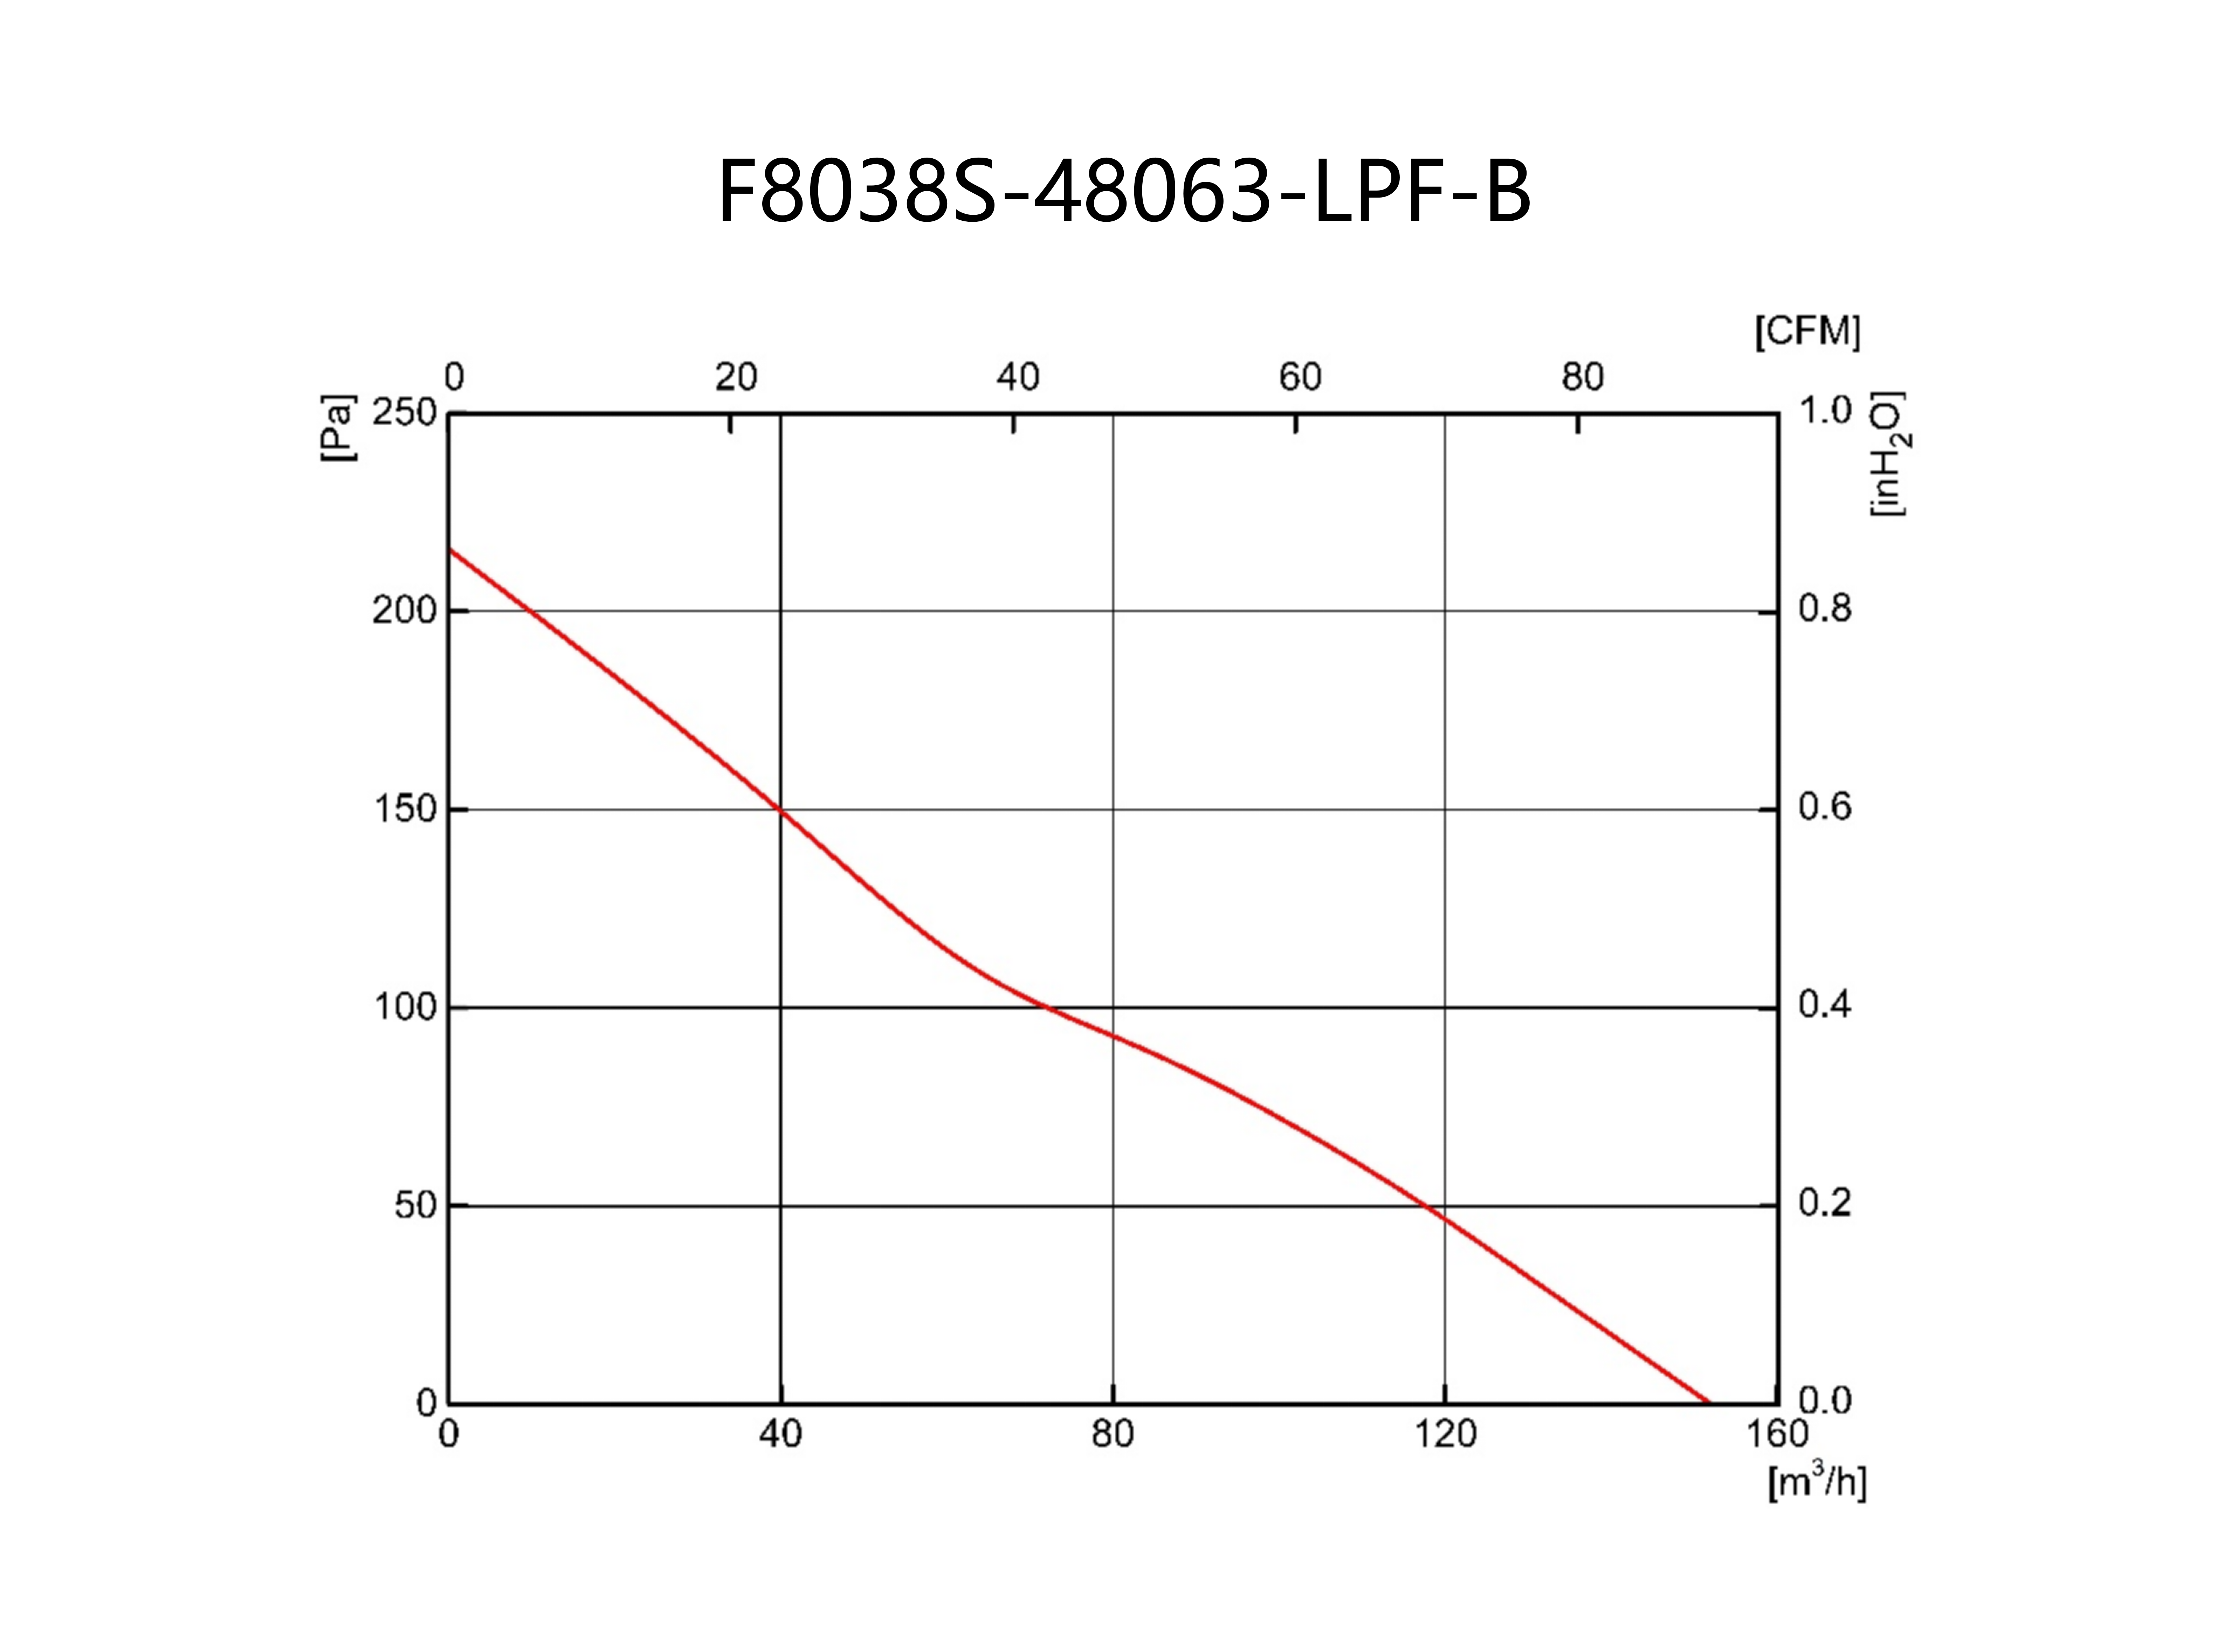 F8038S-48063-LPF-B